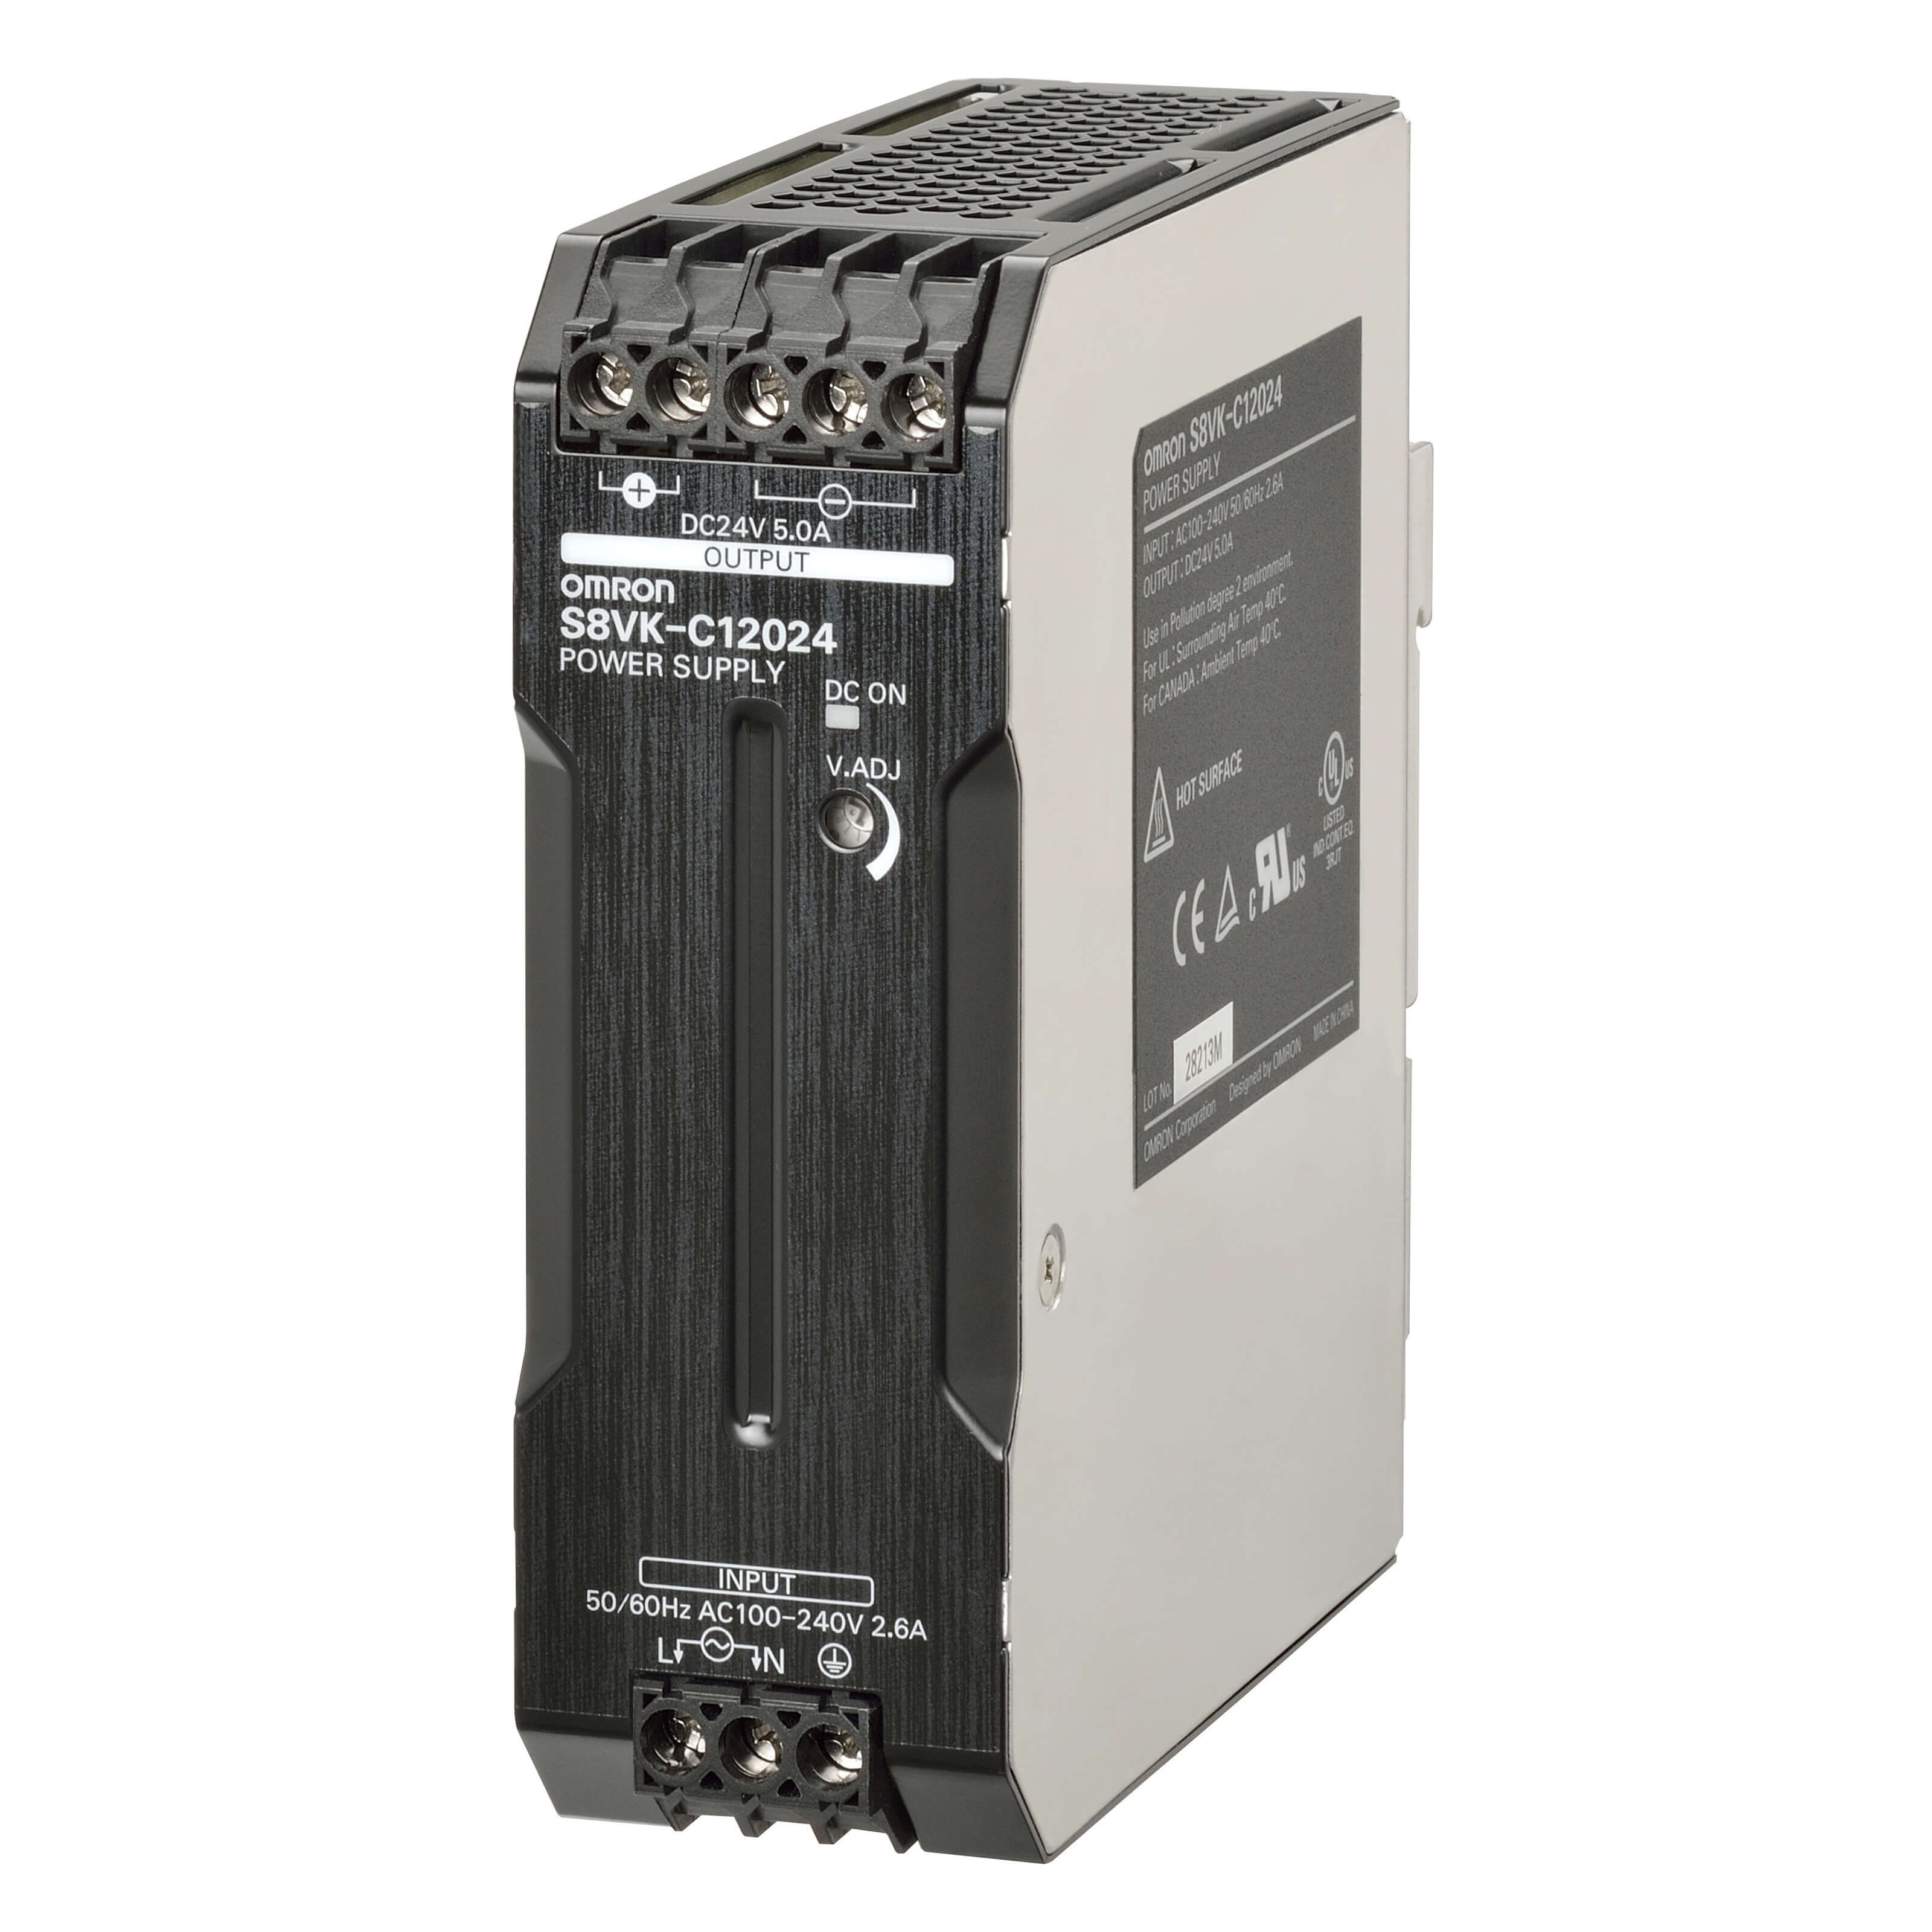 S8VK-C12024 Power Supply Switch Mode 24VDC 120W 5.0A